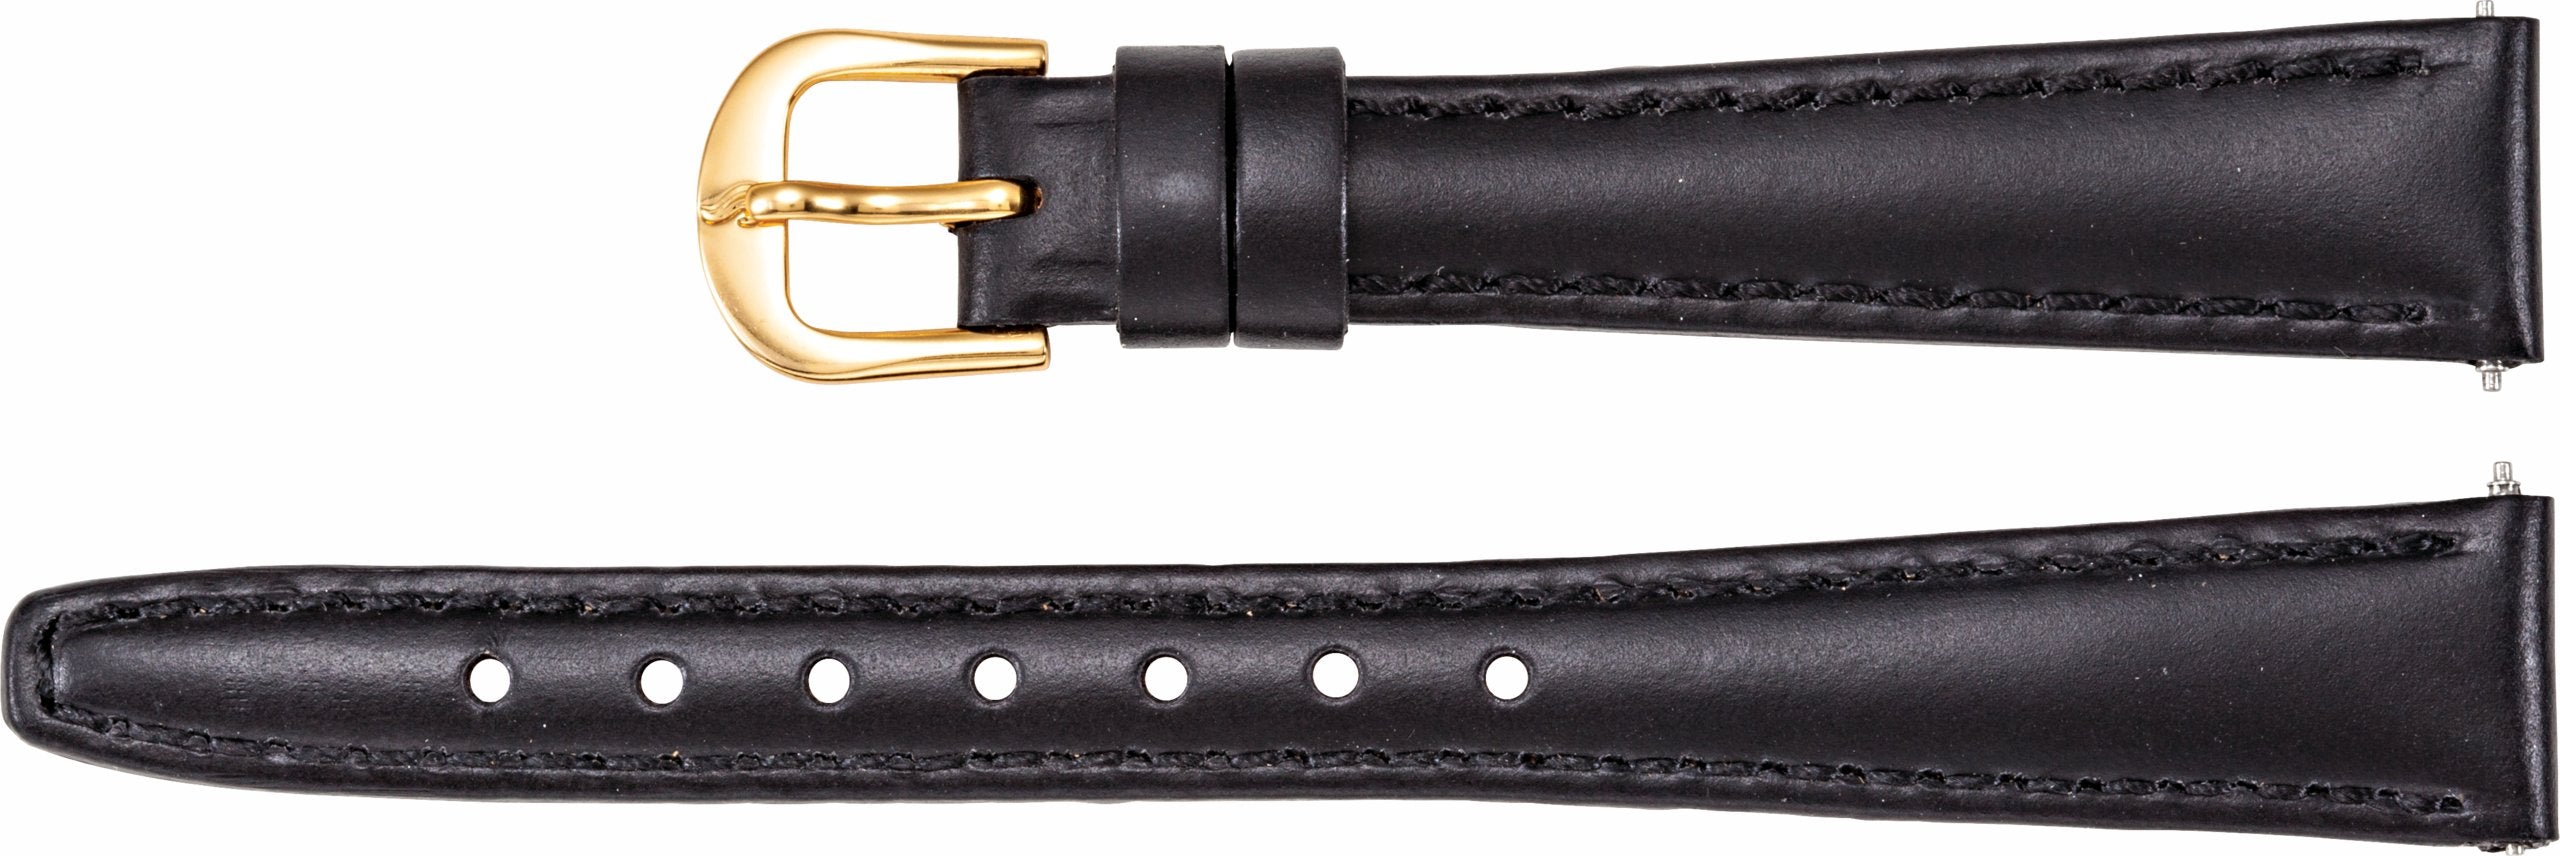 Leather Saddle Padded Watch Band